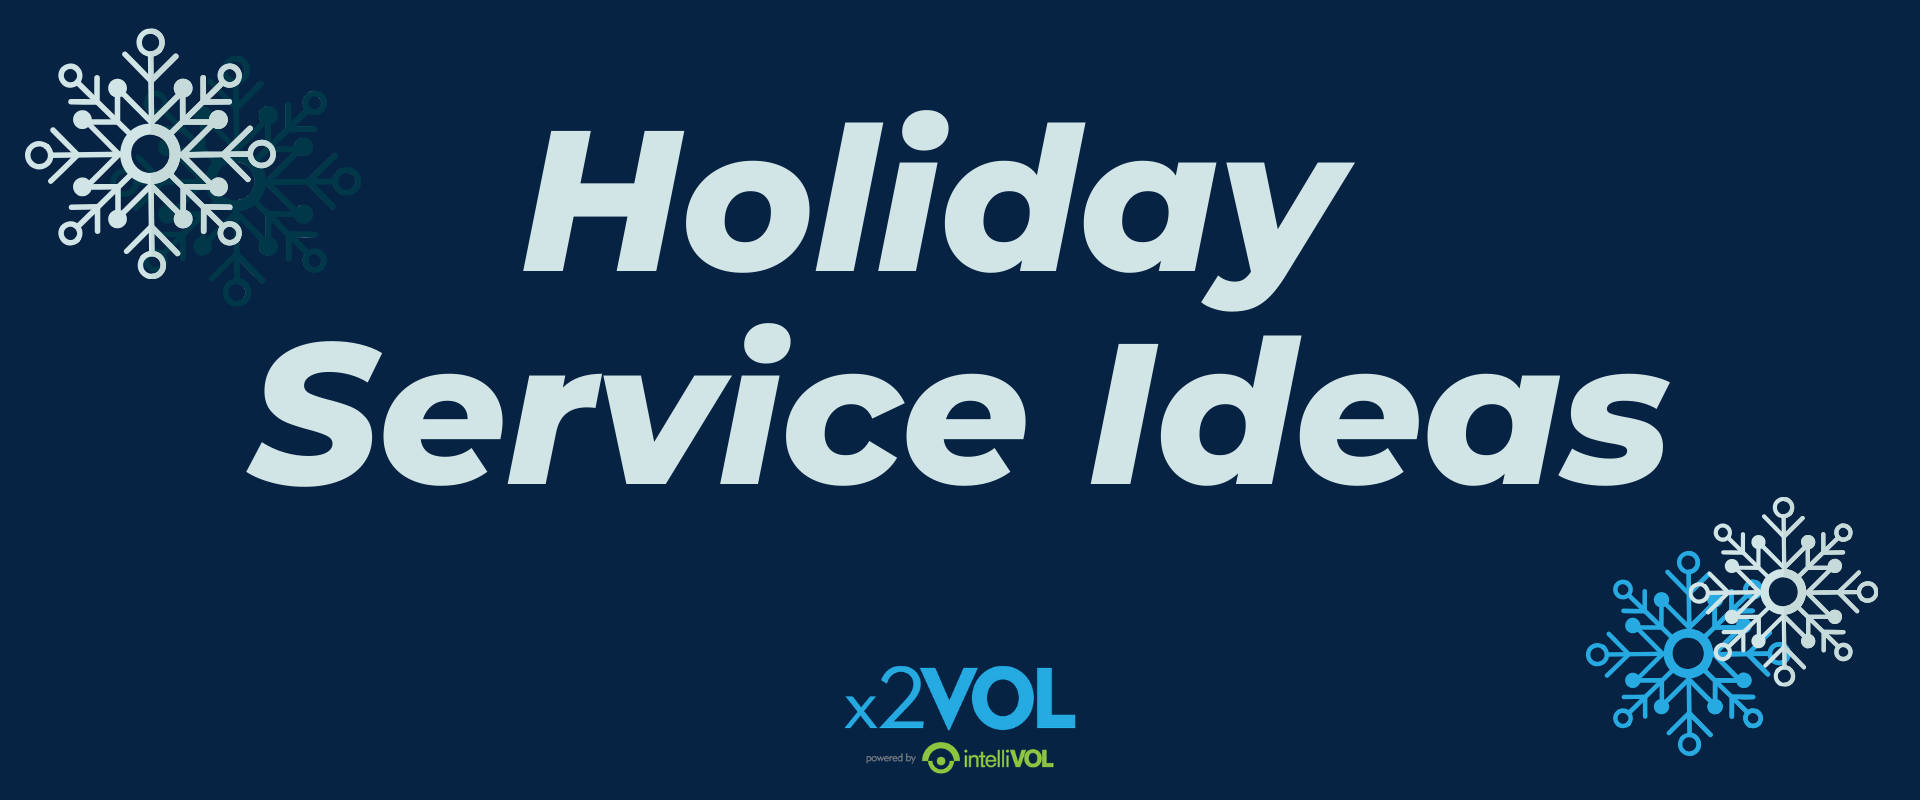 Holiday Service Ideas